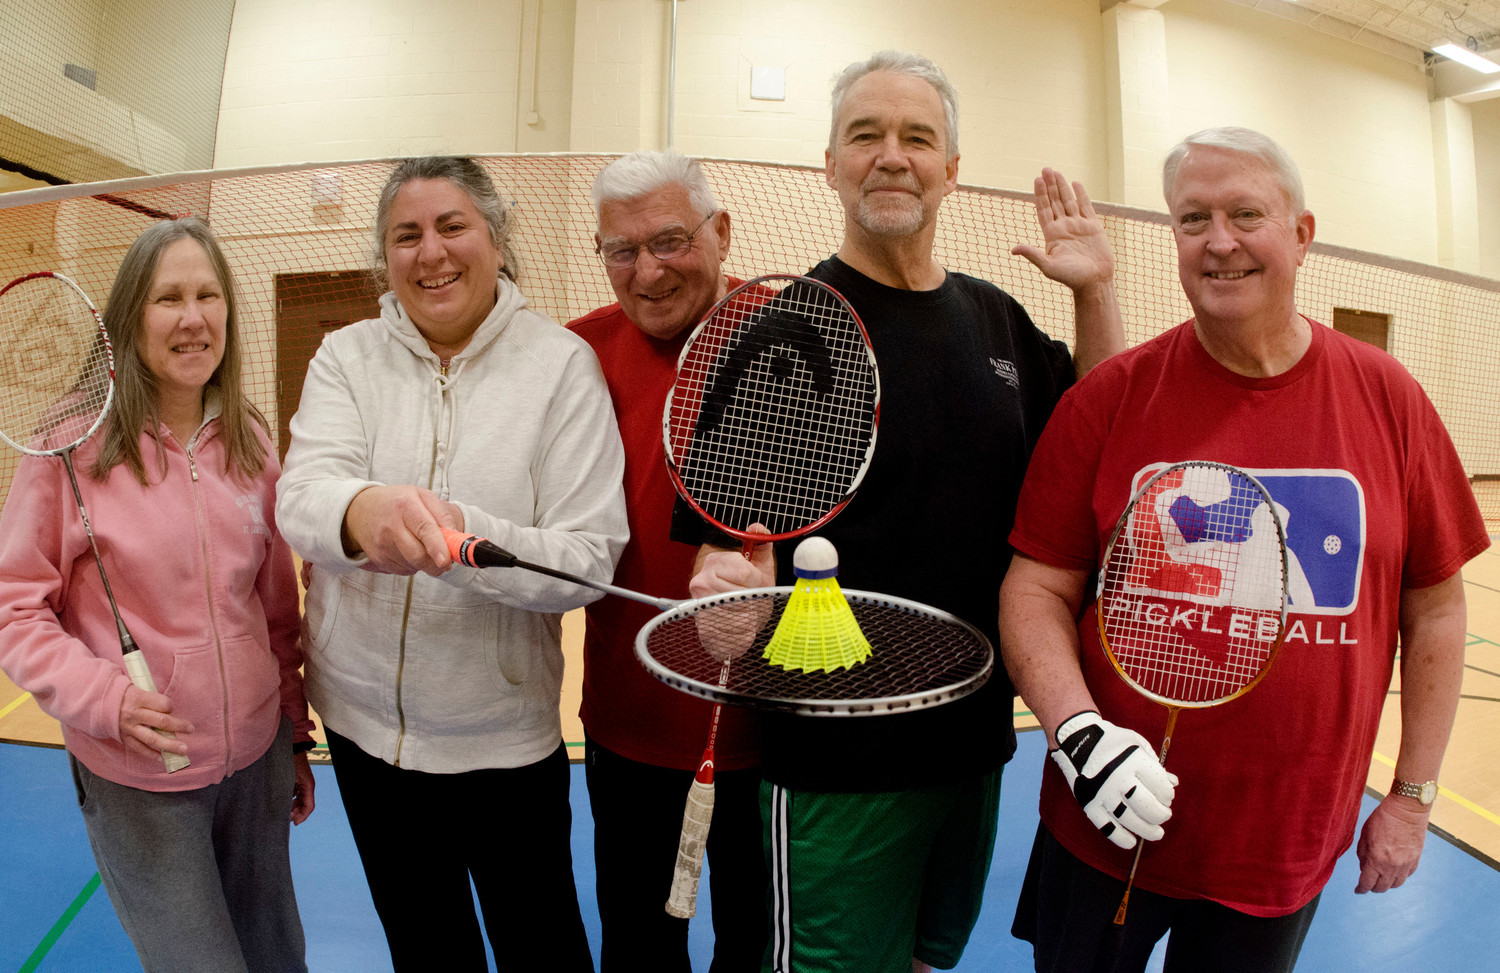 Badminton group from left, Kathy Donato, Michelle Mascena, Bob Costa, Geoff Marion, and Tom Hanson.